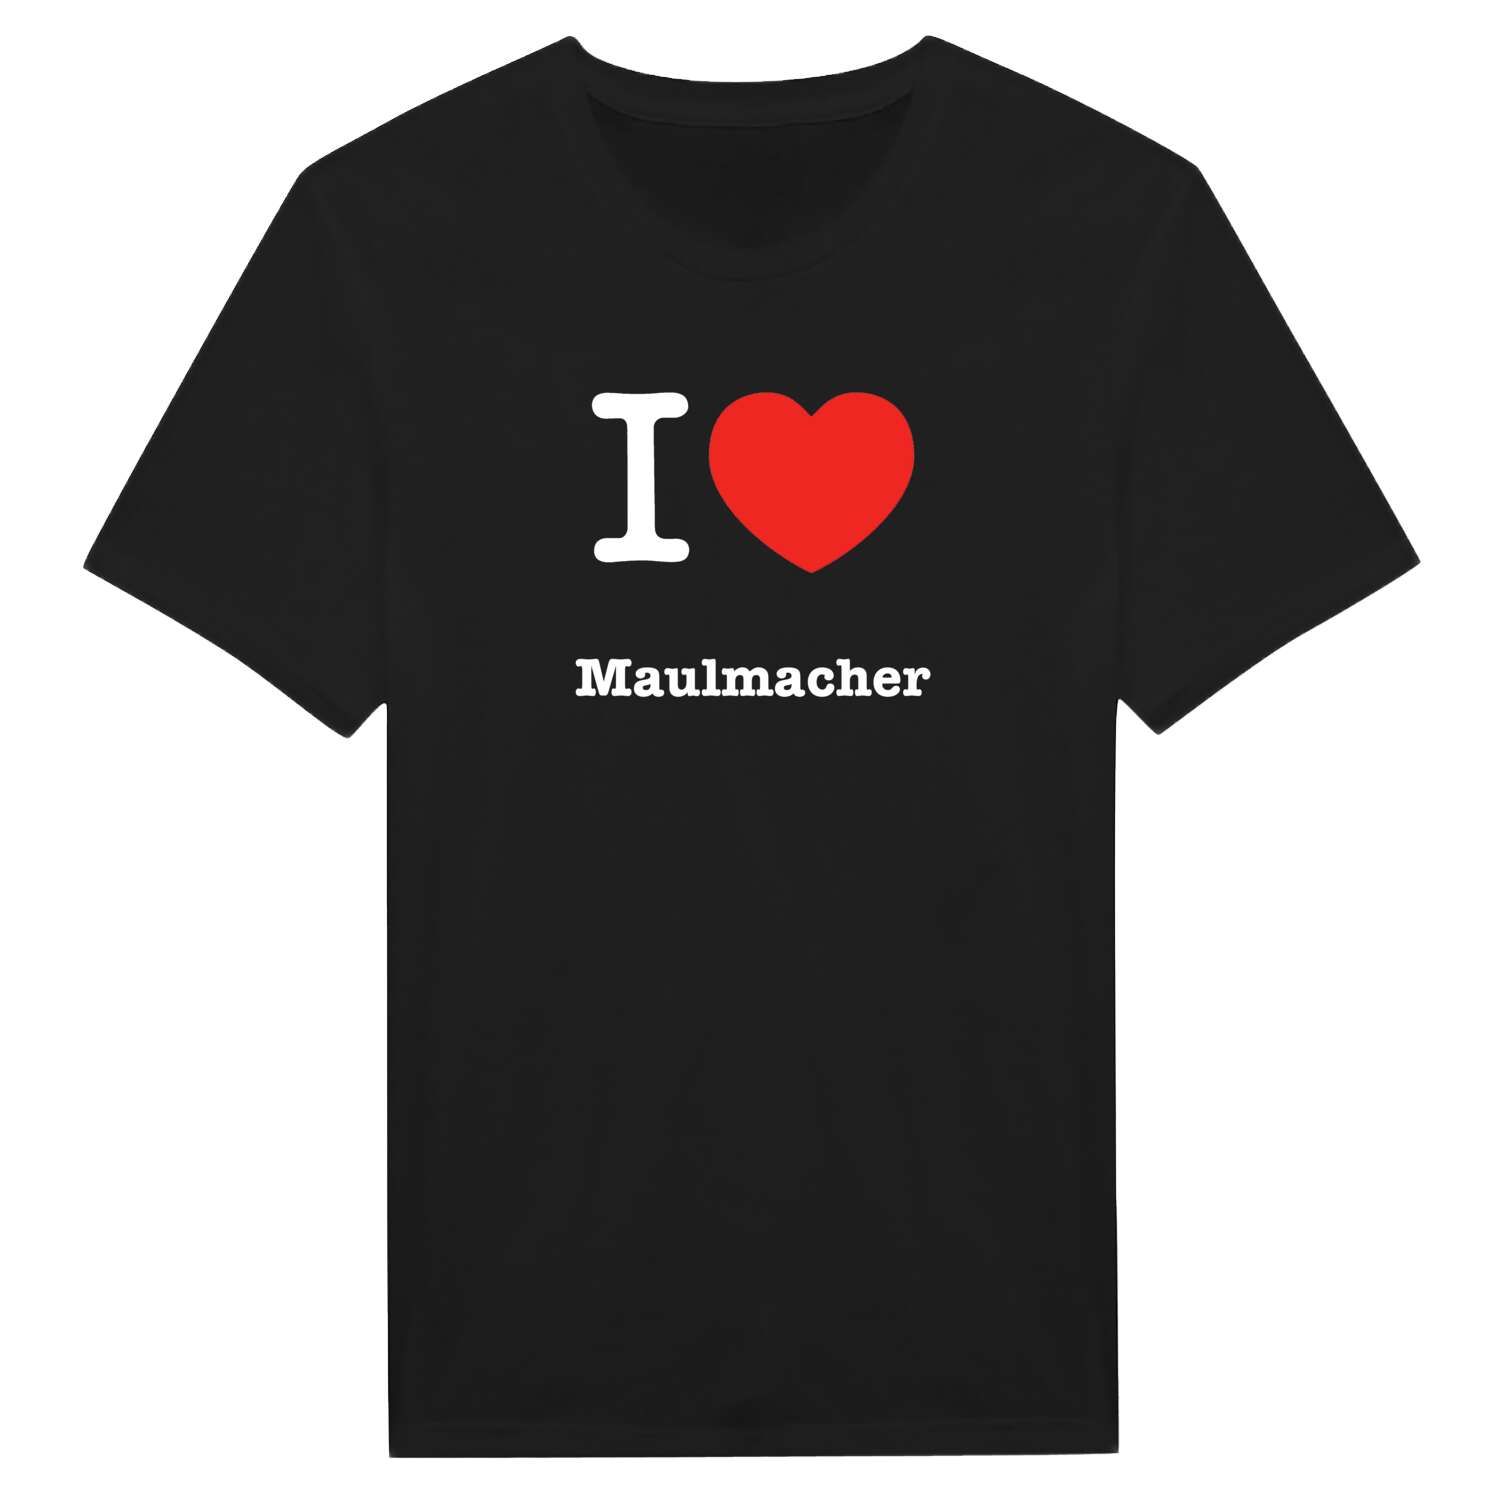 Maulmacher T-Shirt »I love«